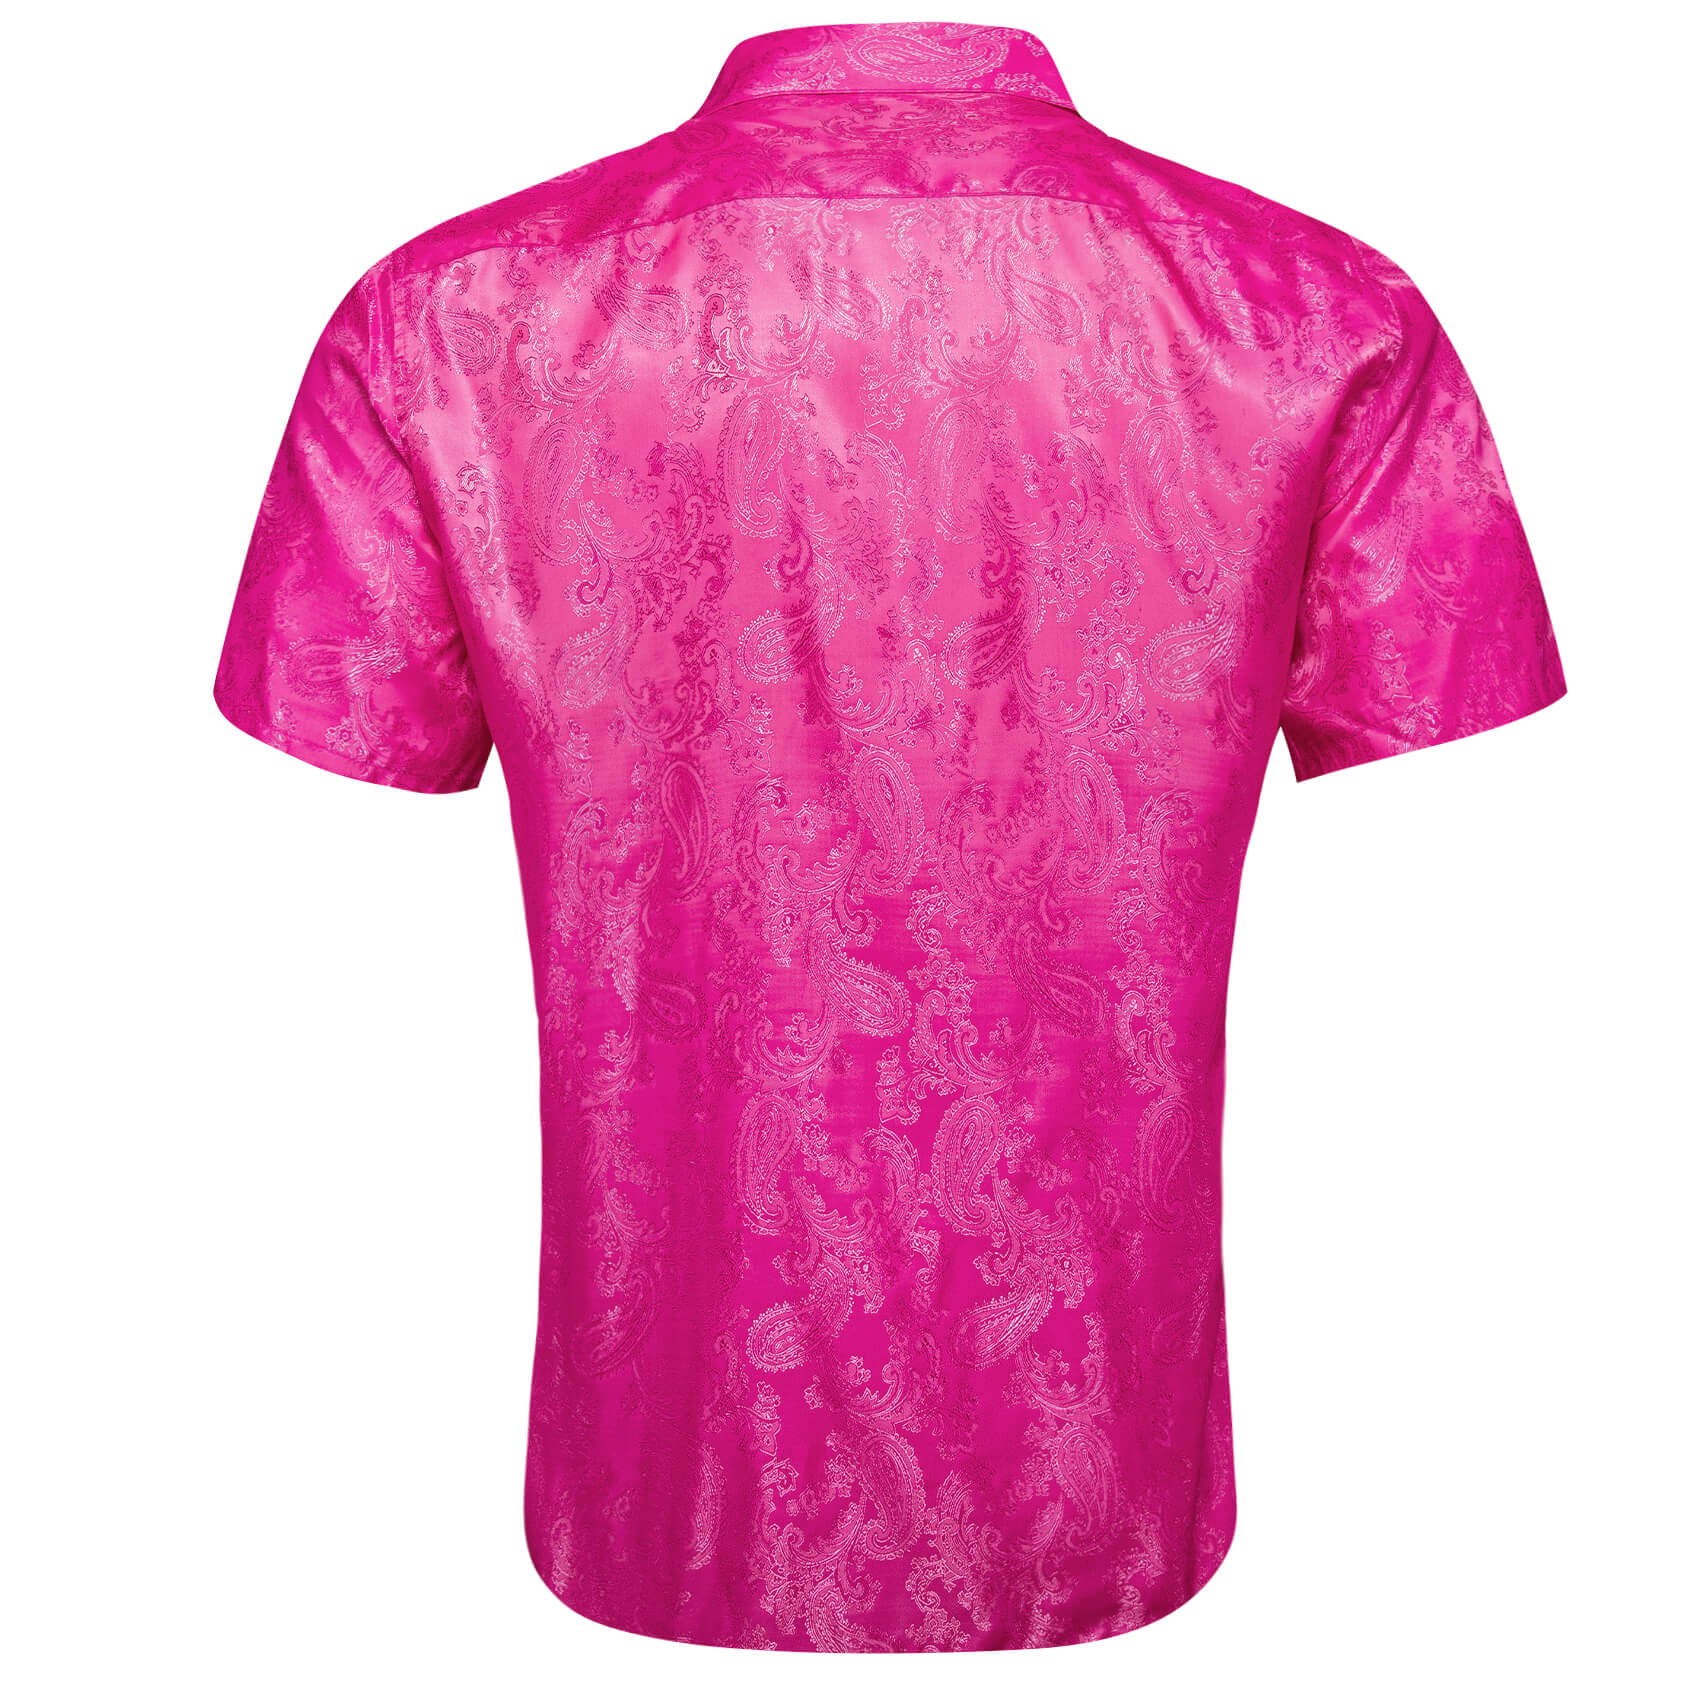  Short Sleeve Shirt Jacquard Paisley Deep Pink Shirtshort shirts